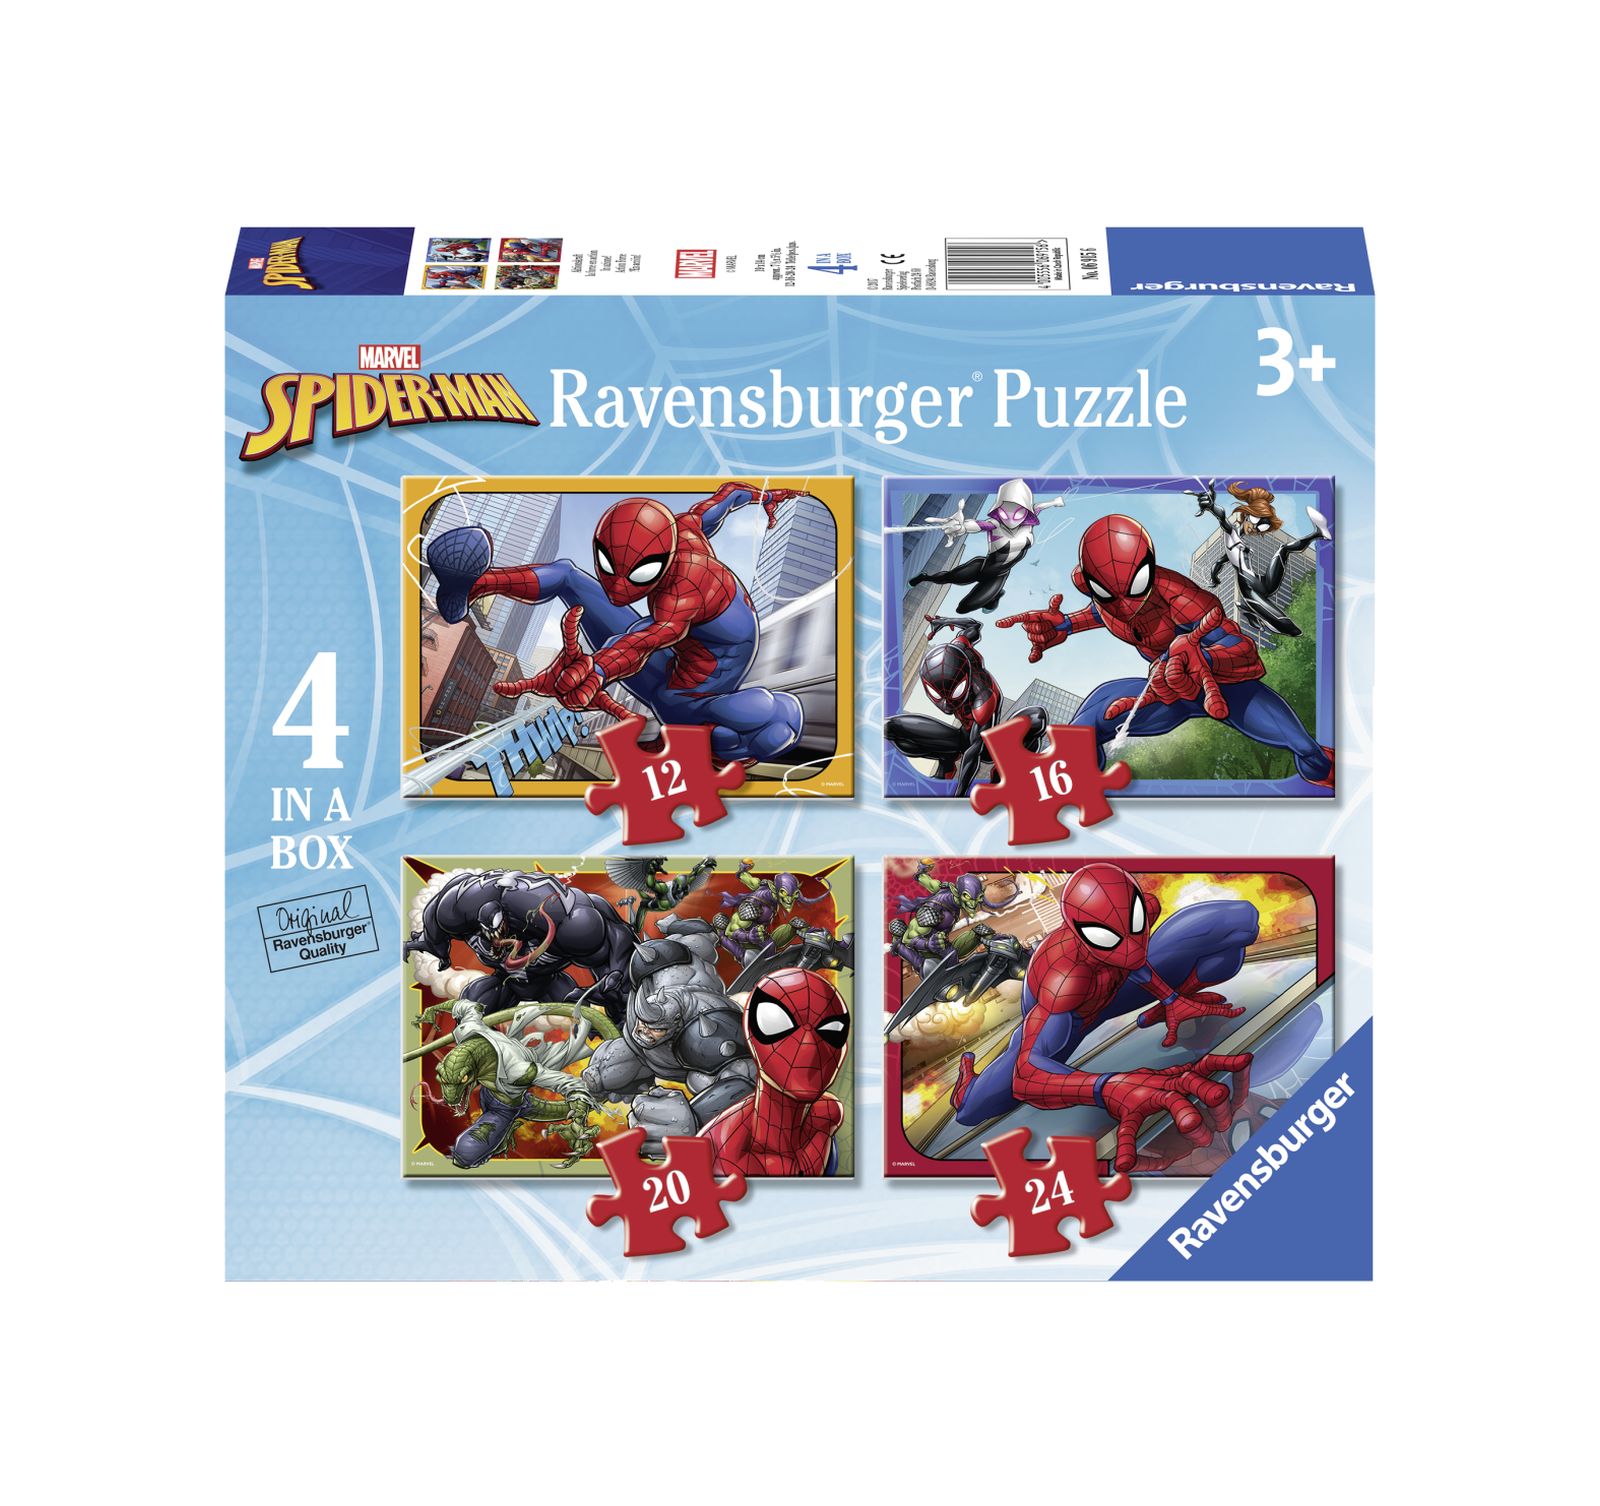 Ravensburger puzzle 4 in a box - spiderman - RAVENSBURGER, Spiderman